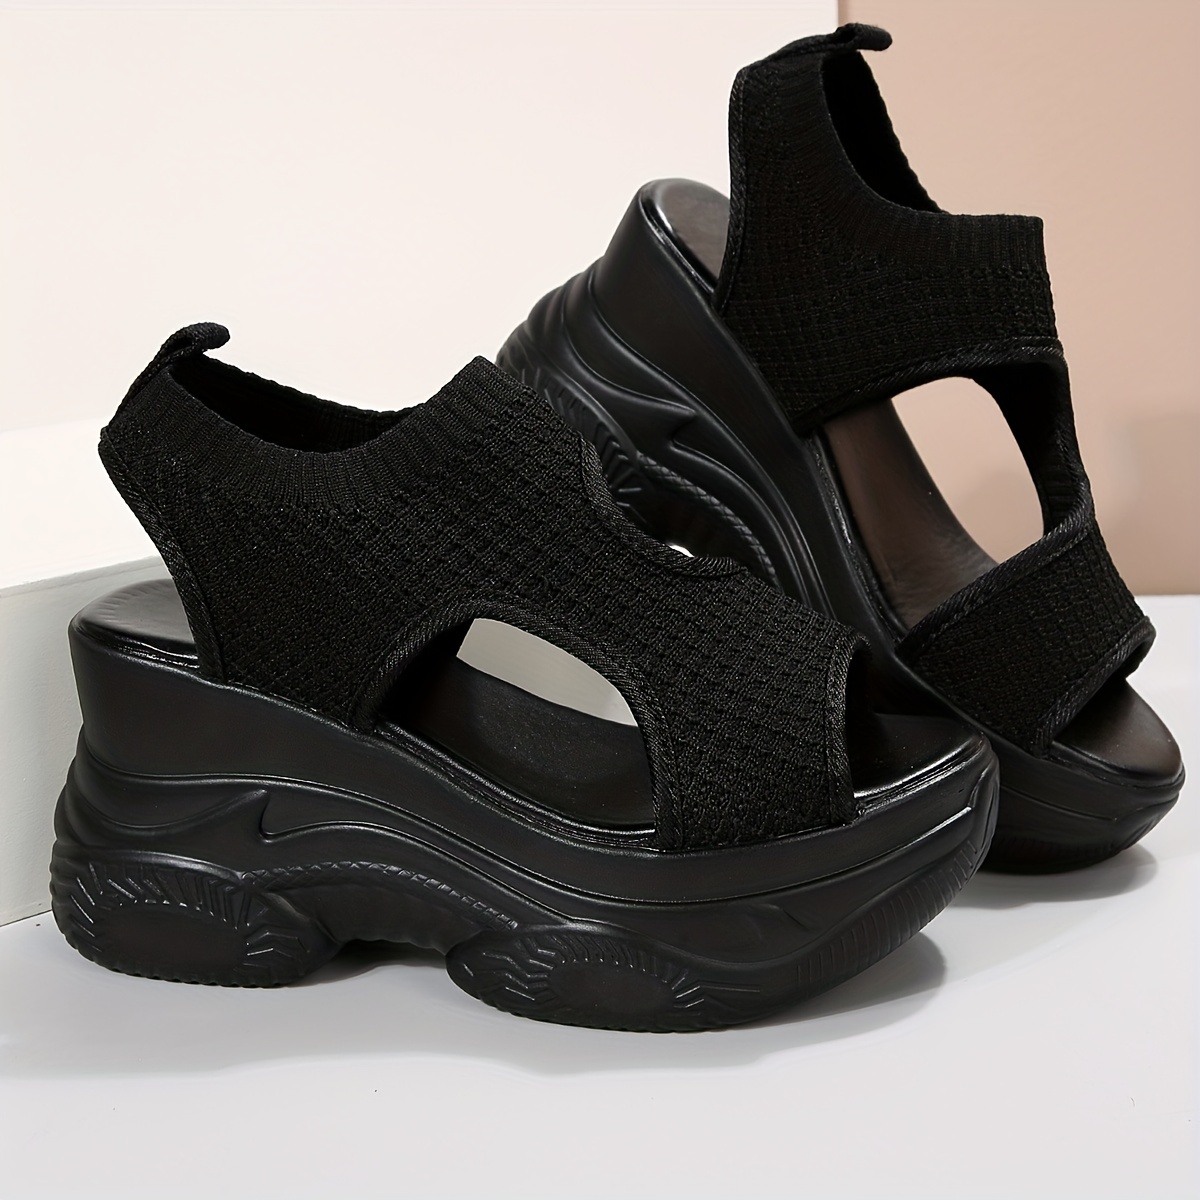 Women's Platform Wedge Sandals, Open Toe Knit Slip On Slingback Shoes,  Casual Trendy Heightening Beach Sandals